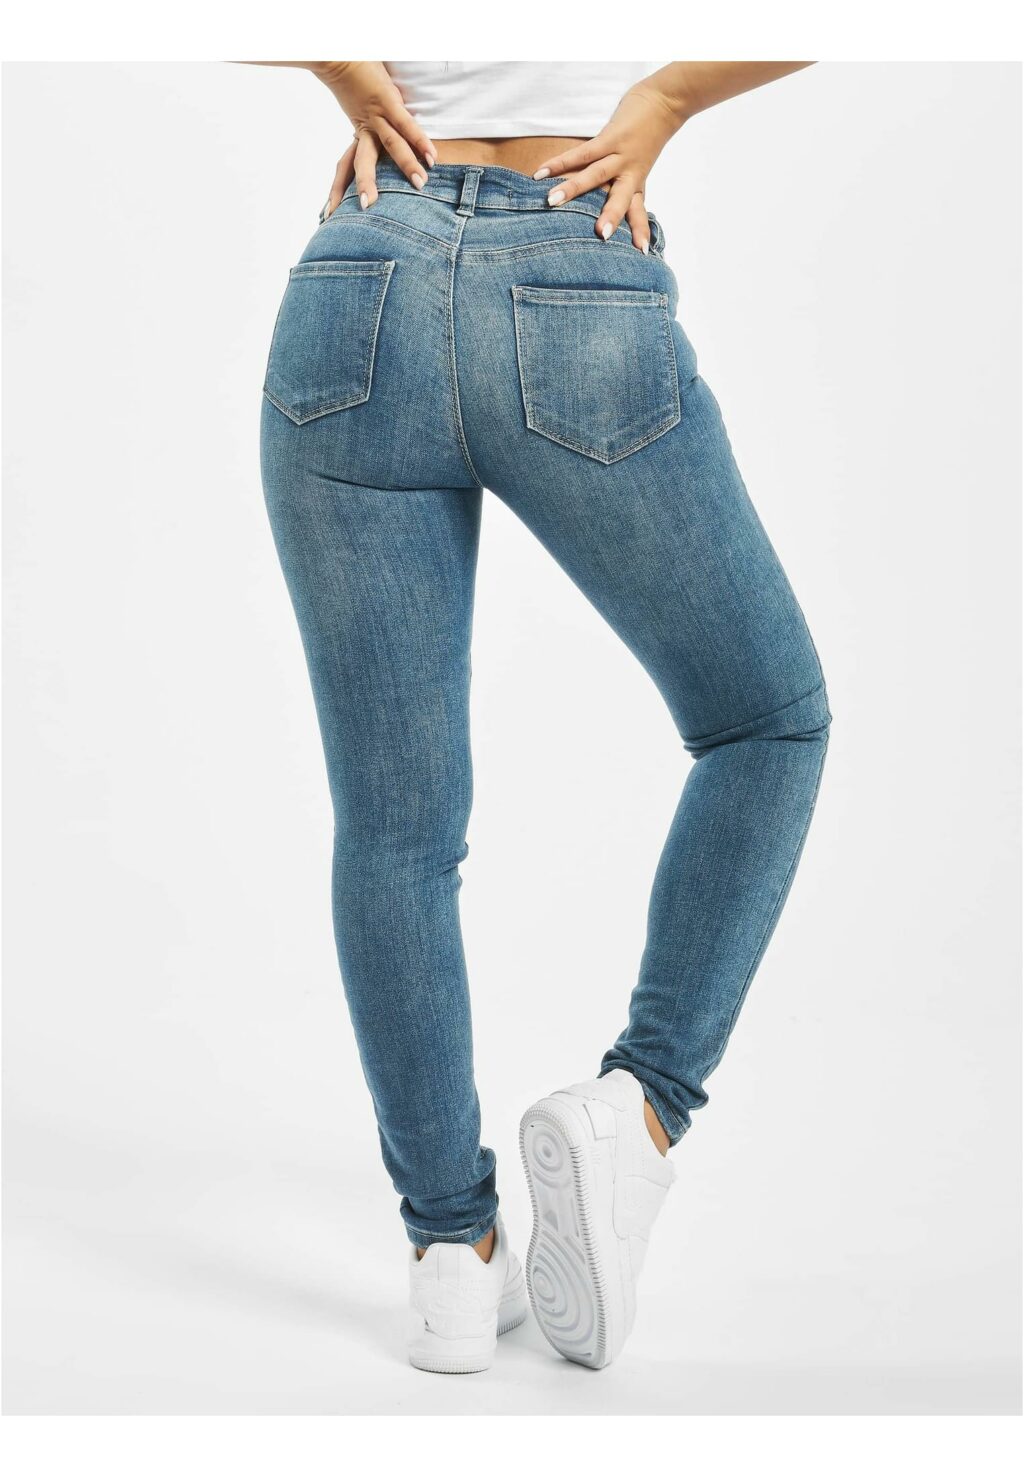 Lindo Skinny Jeans blue DFLJS153